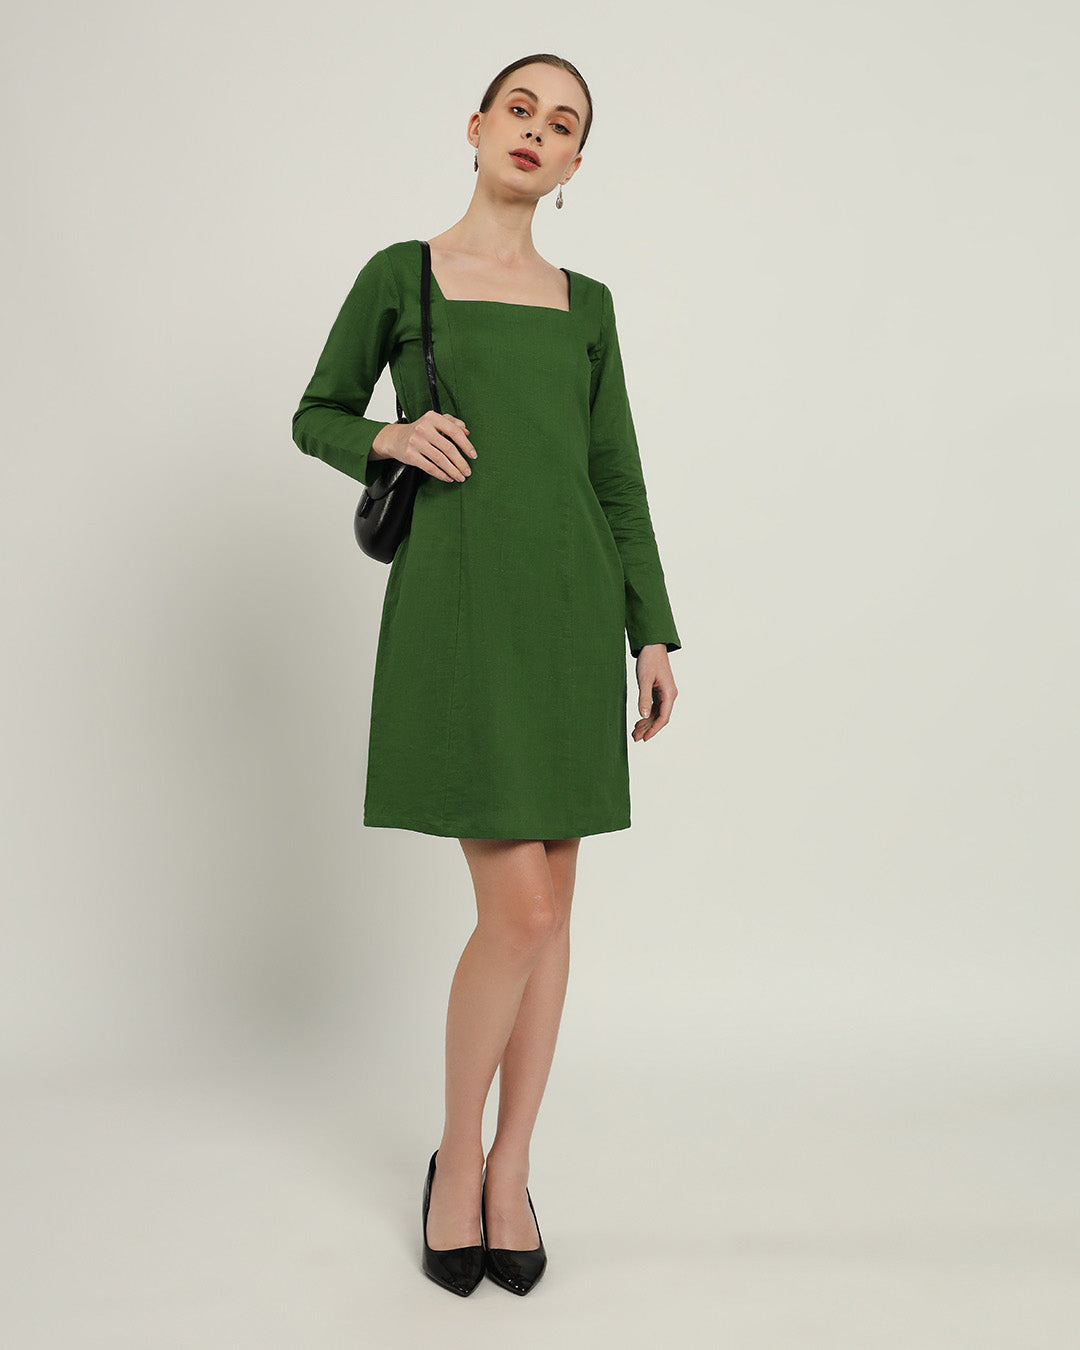 The Auburn Emerald Dress